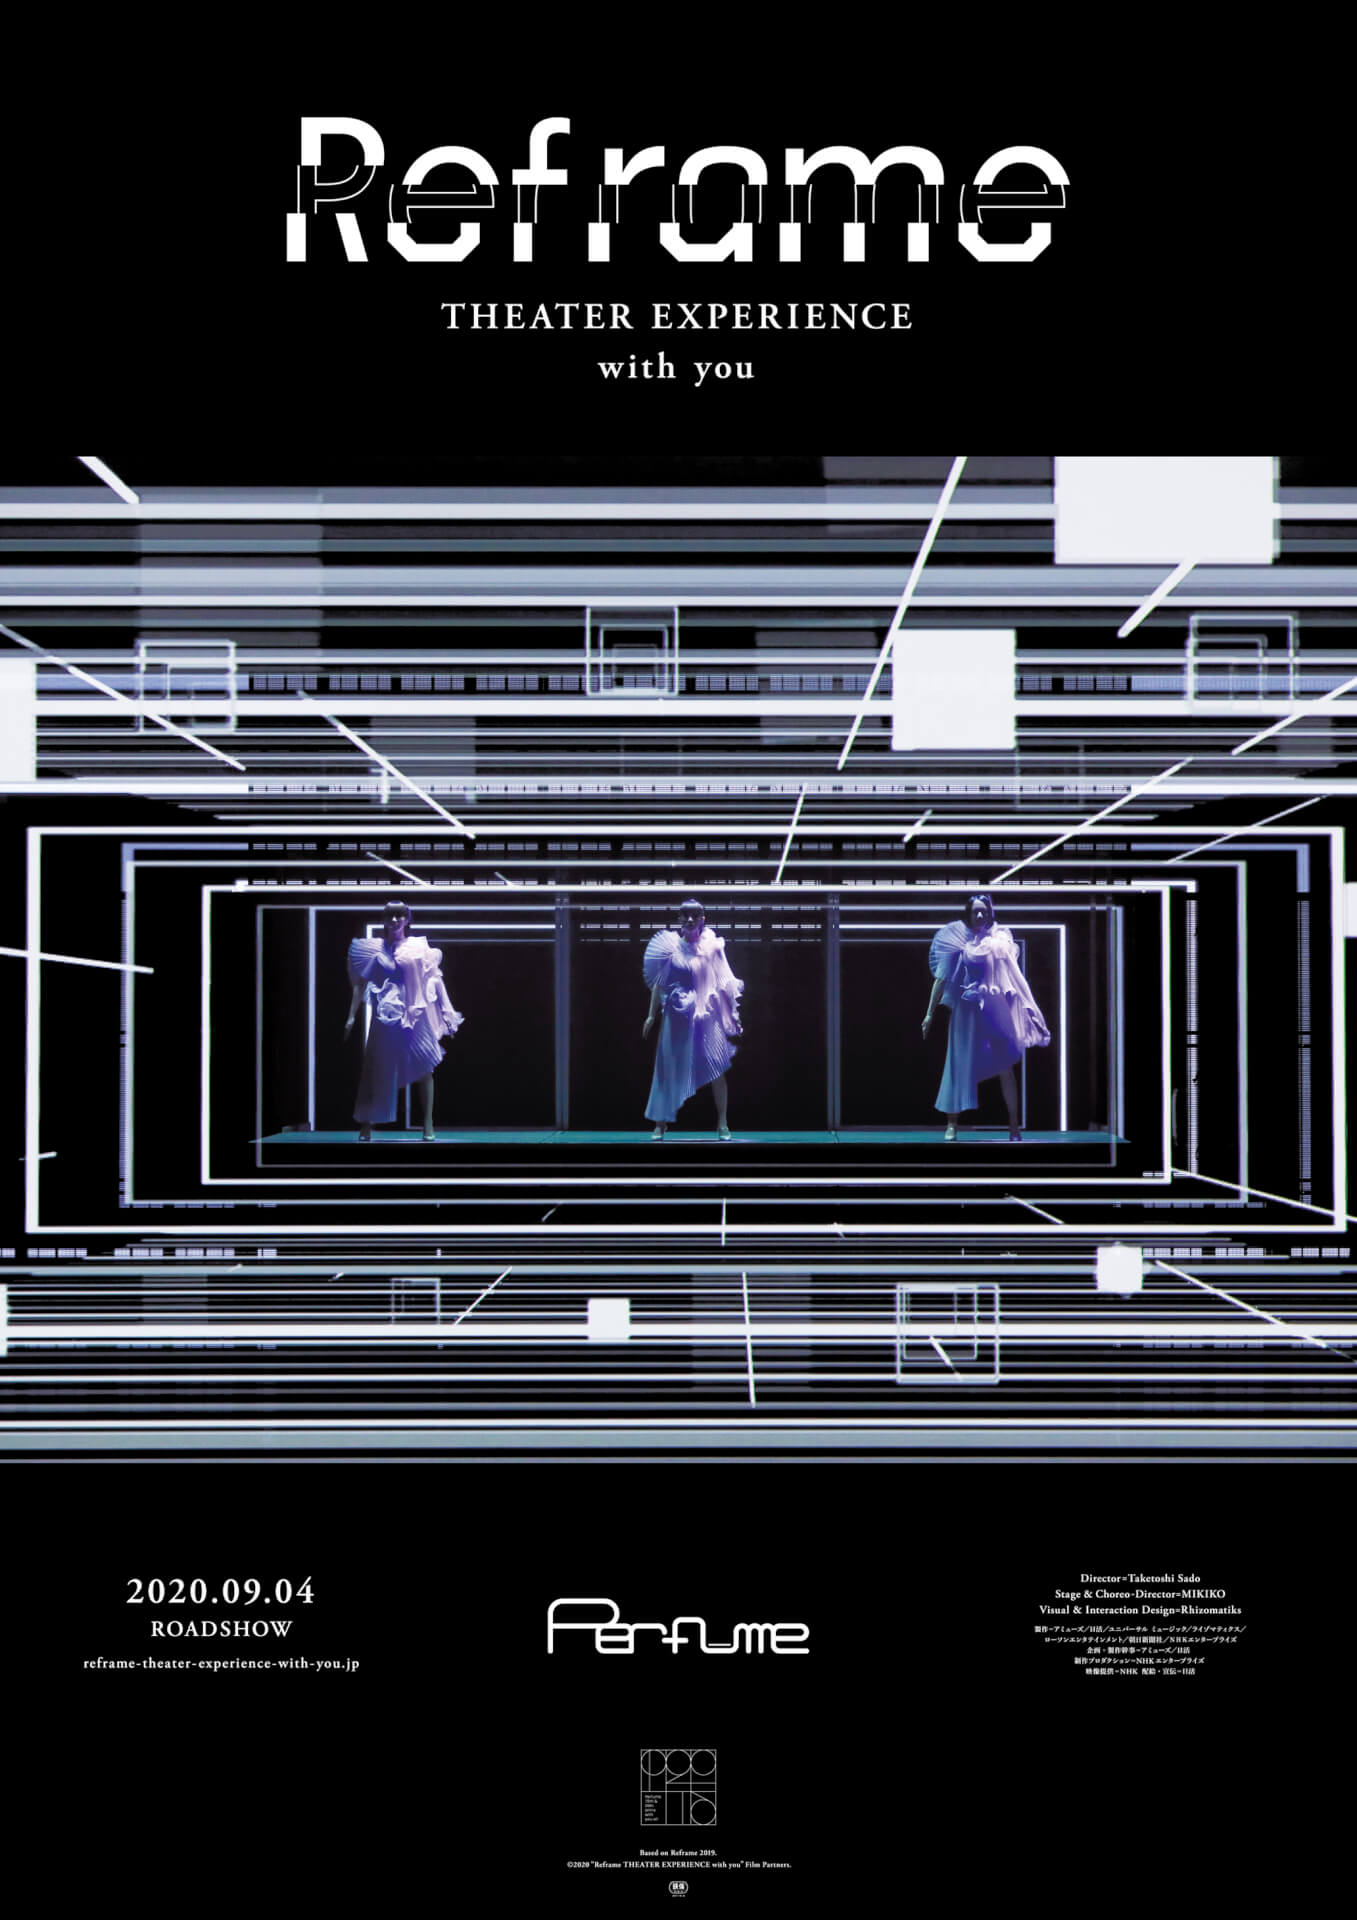 Perfumeの劇場映画『Reframe THEATER EXPERIENCE with you』がメンバーたちによるコメンタリー収録の副音声上映決定！前夜祭イベントも開催 music20200819-perfume3